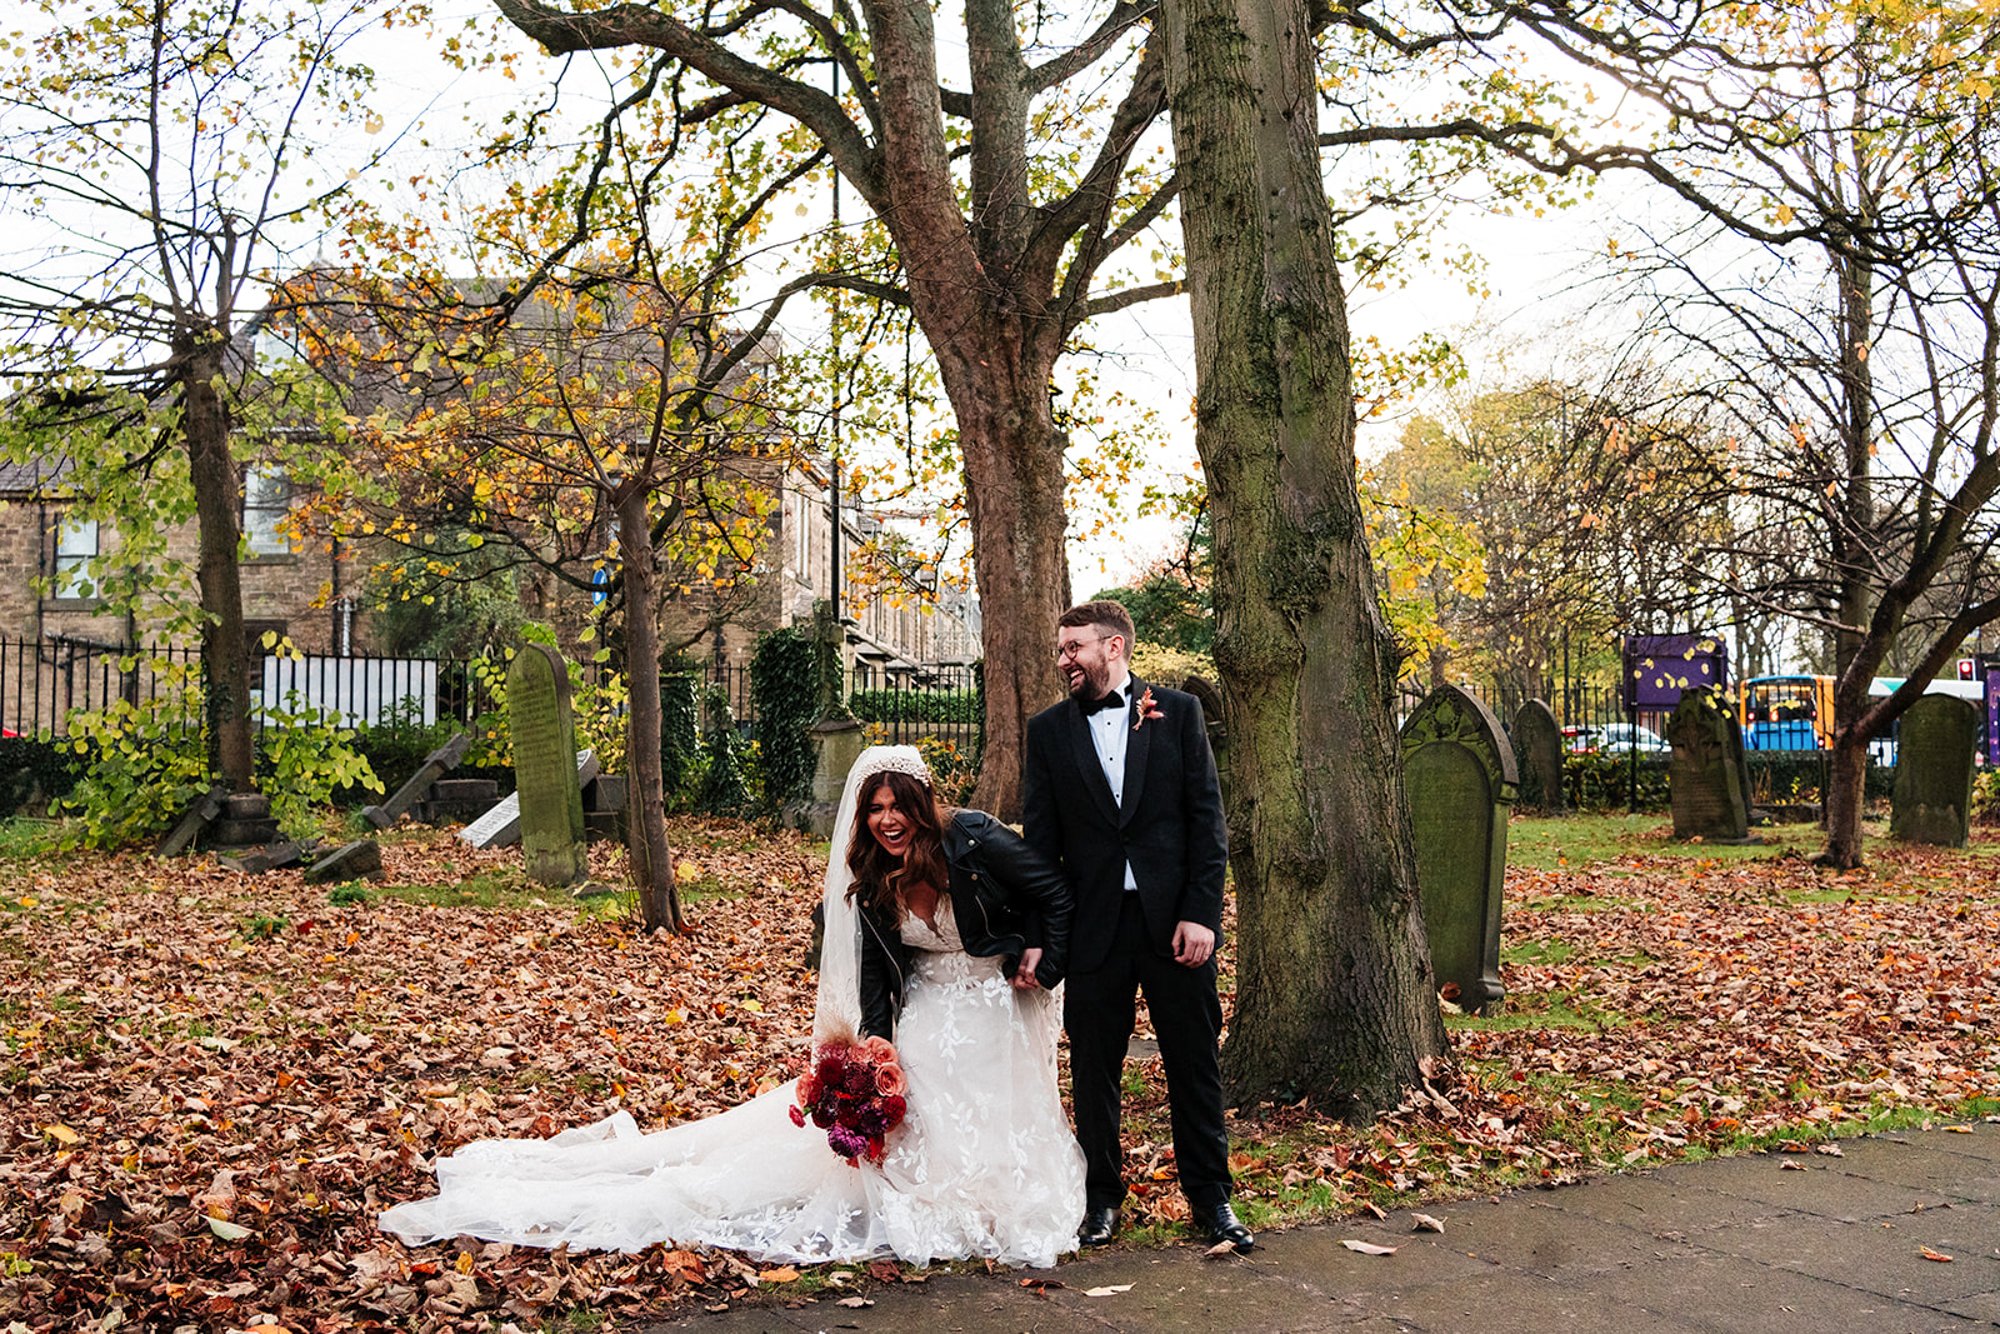 sallytphoto-creative-relaxed-wedding-photography-north-yorkshire-north-east-teesside-0031.jpg